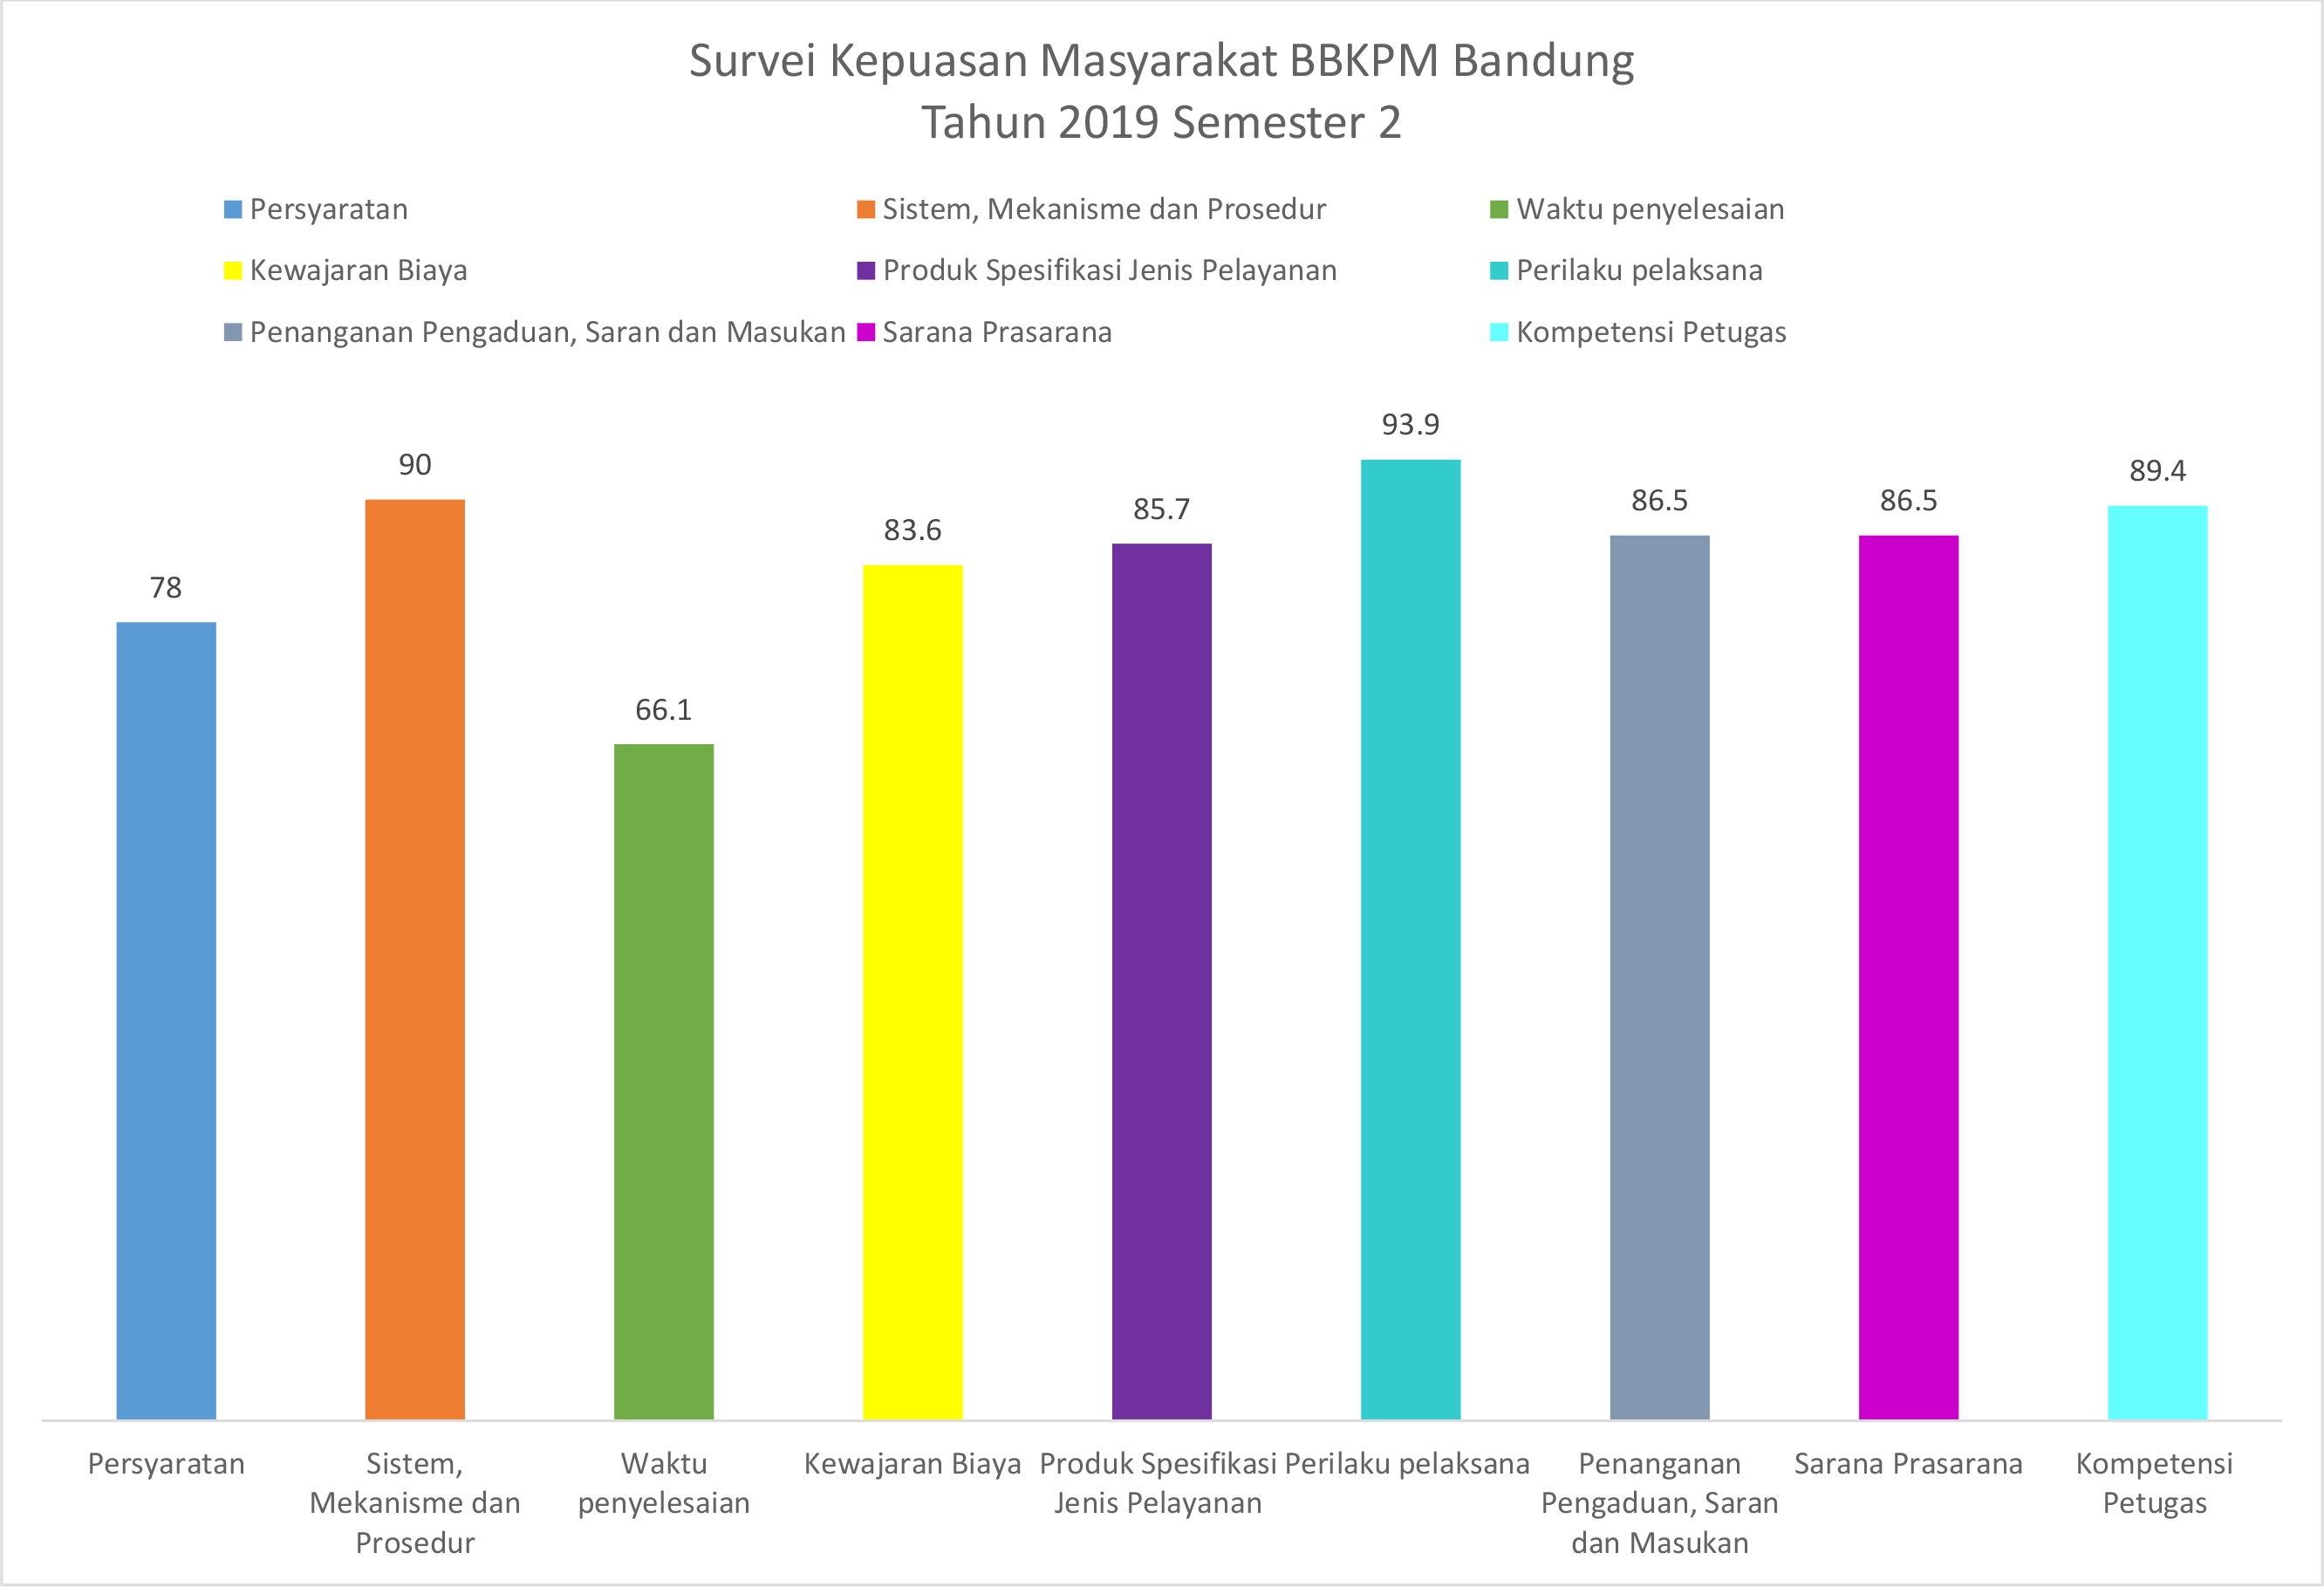 HASIL SURVEY KEPUASAN MASYARAKAT/BBKPM-BANDUNG 2019 SMTR 2